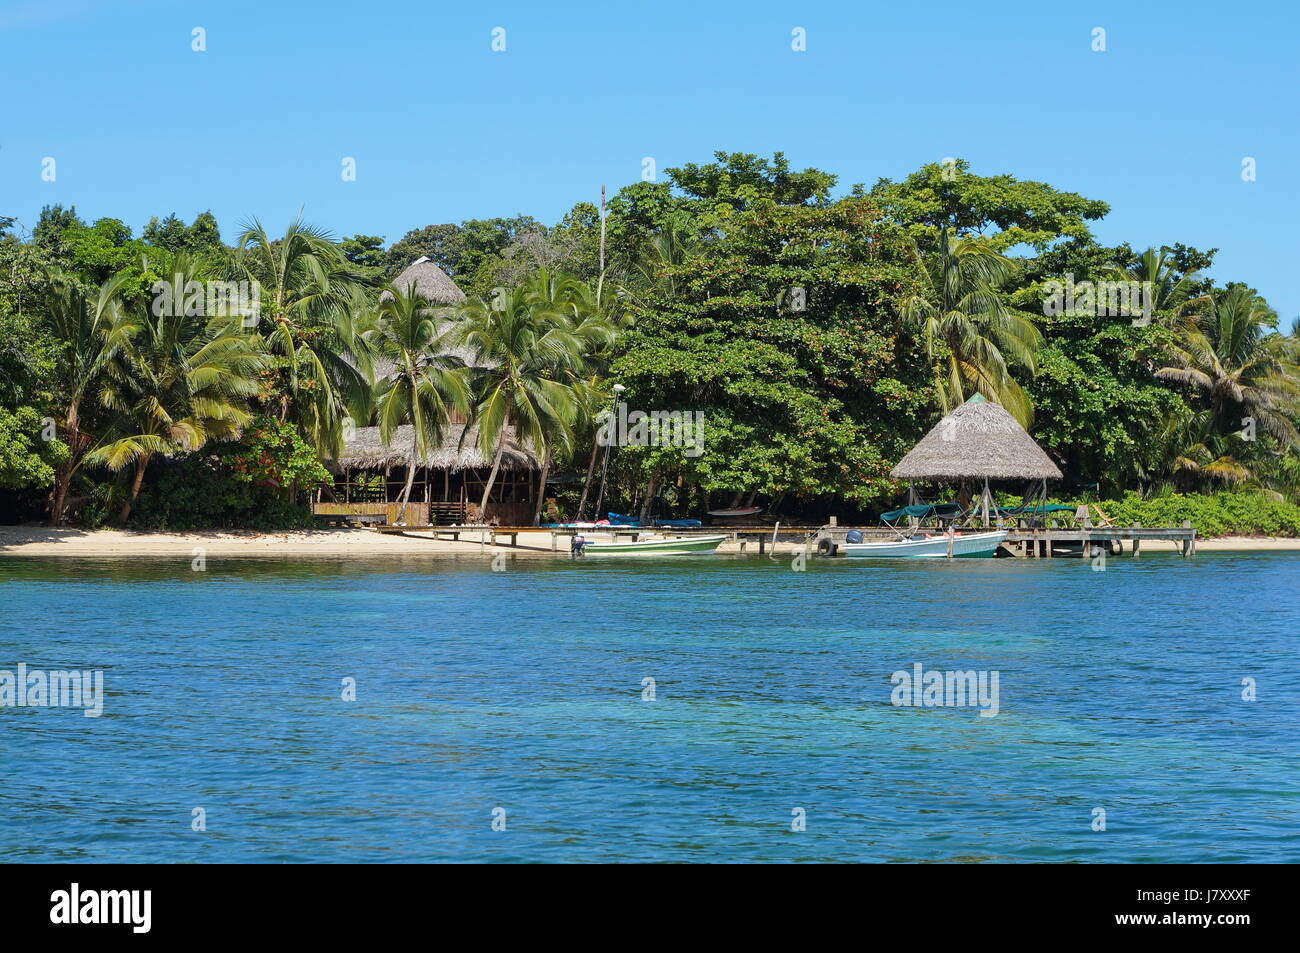 Coastline with an eco resort and lush tropical vegetation, Bocas del Toro, Caribbean sea, Panama, Central America Stock Photo